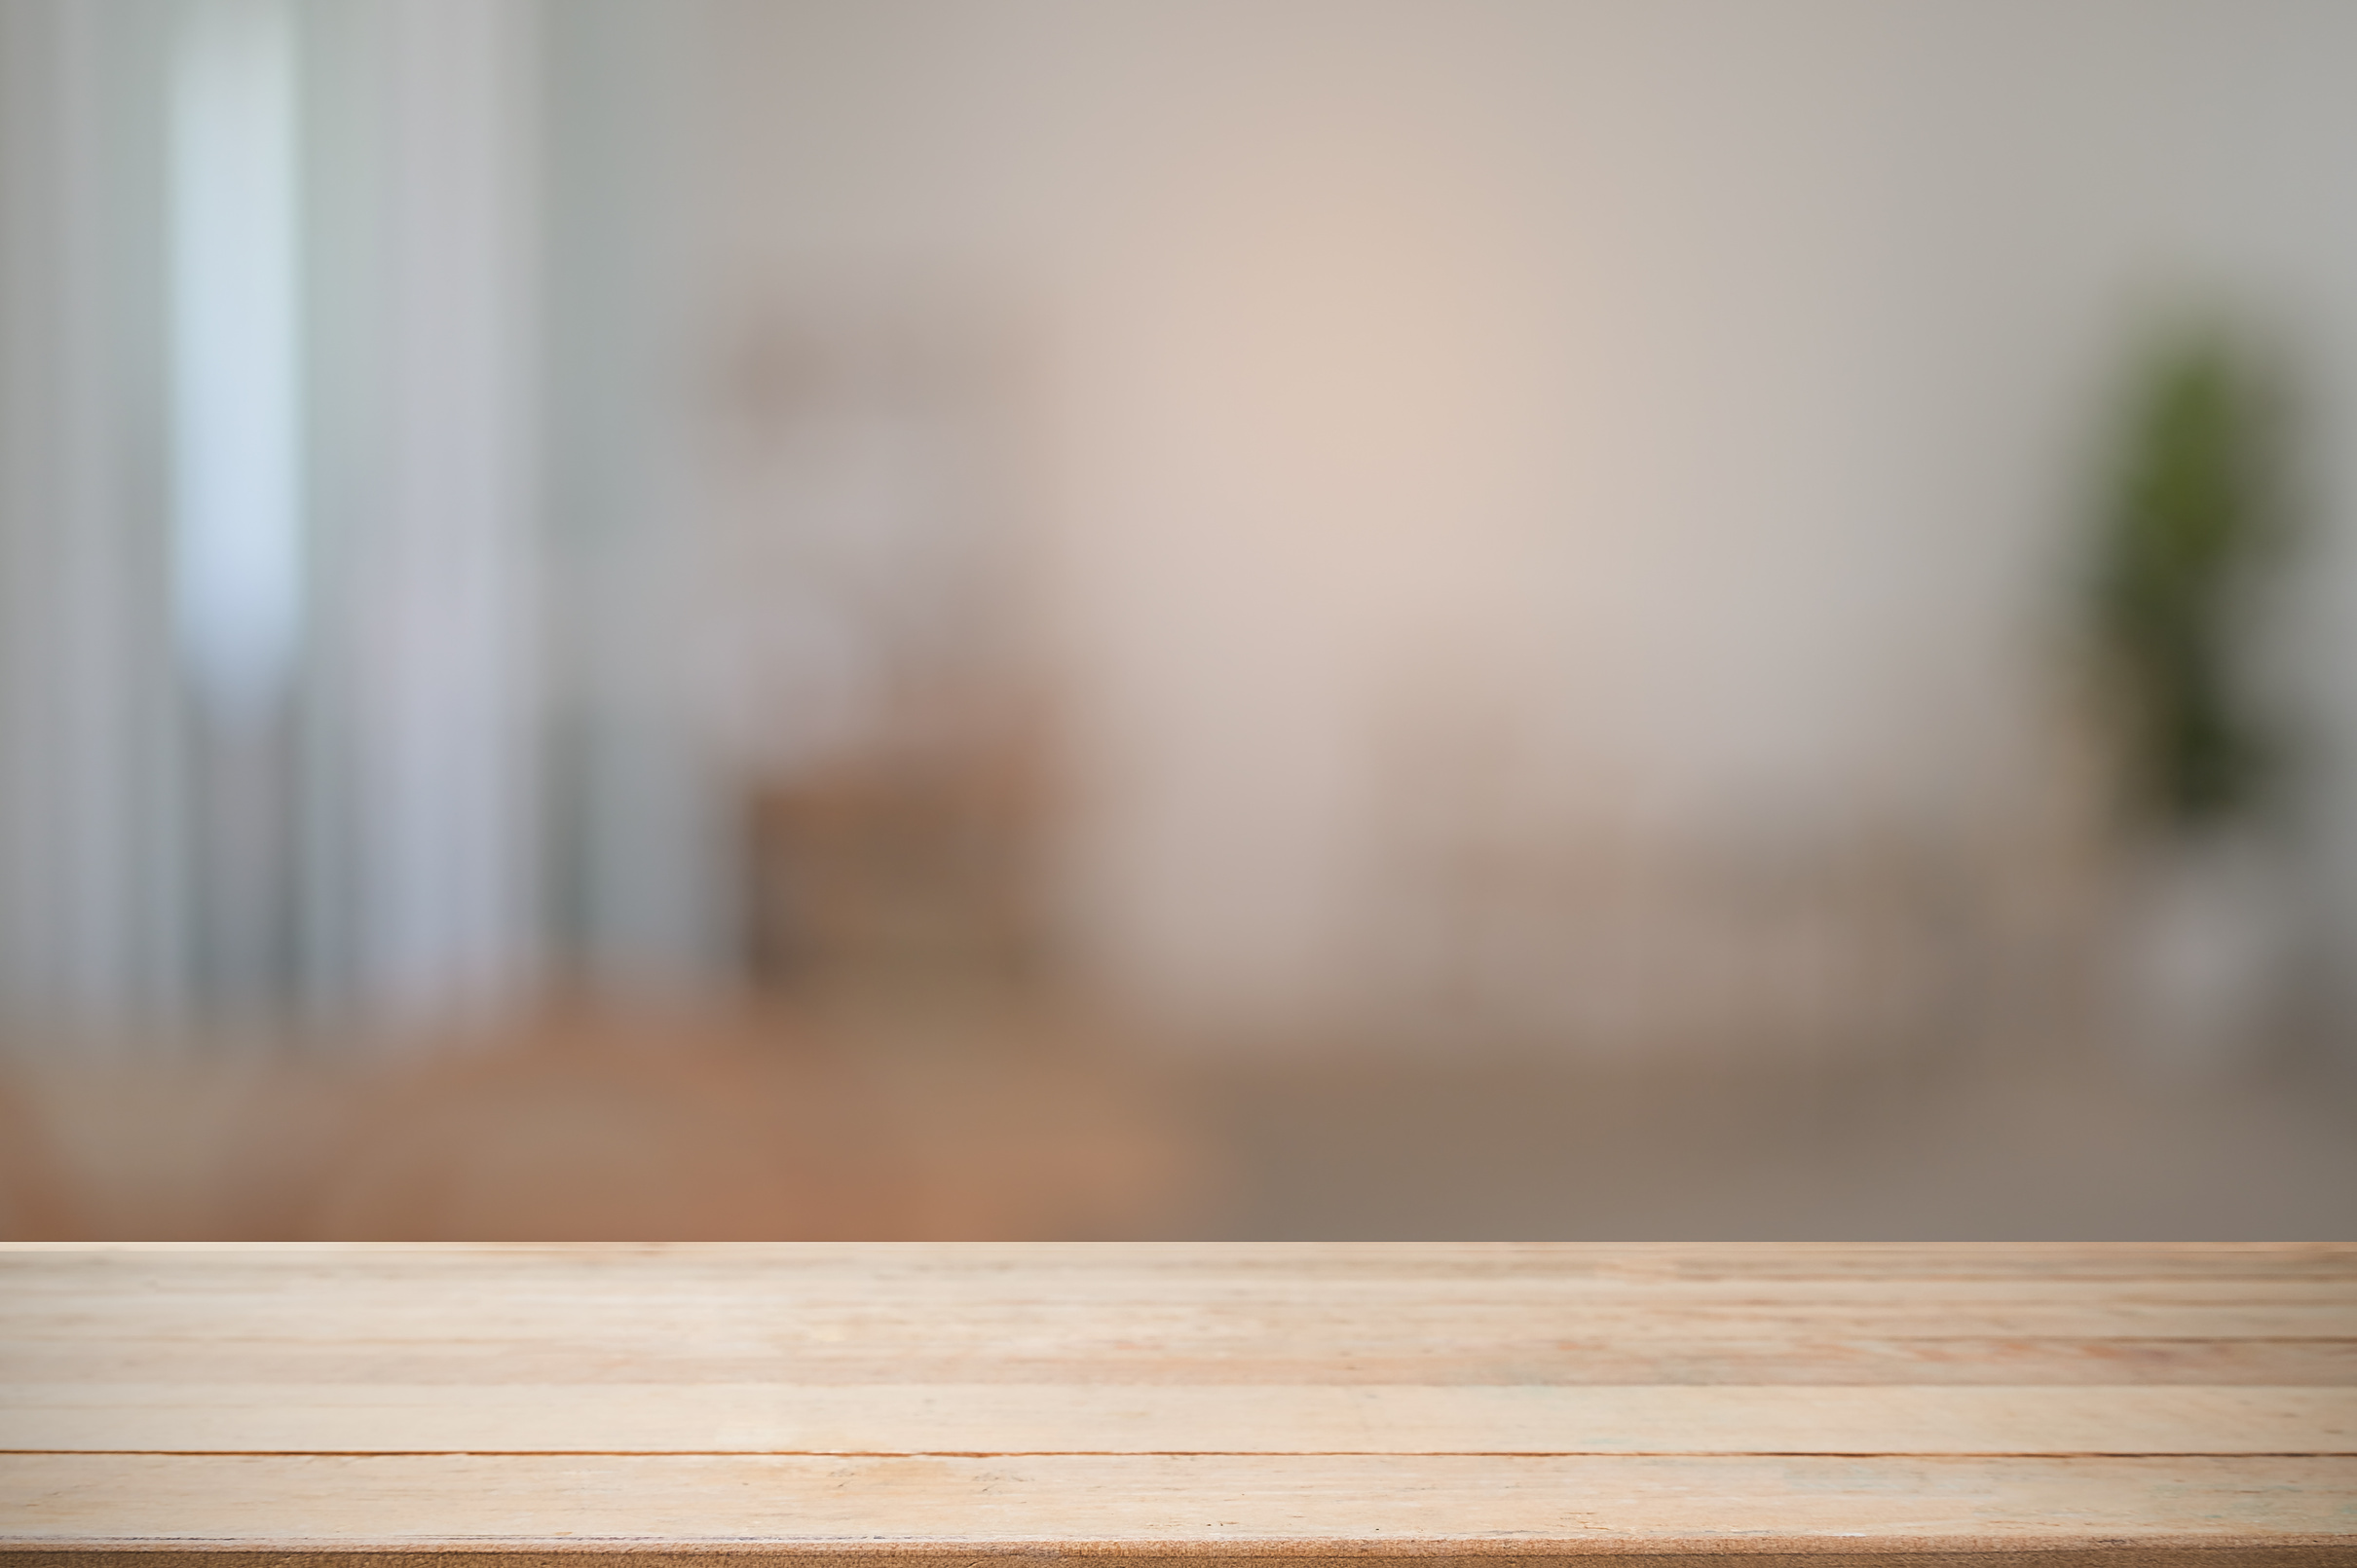 Montage wooden desk with blur room background.